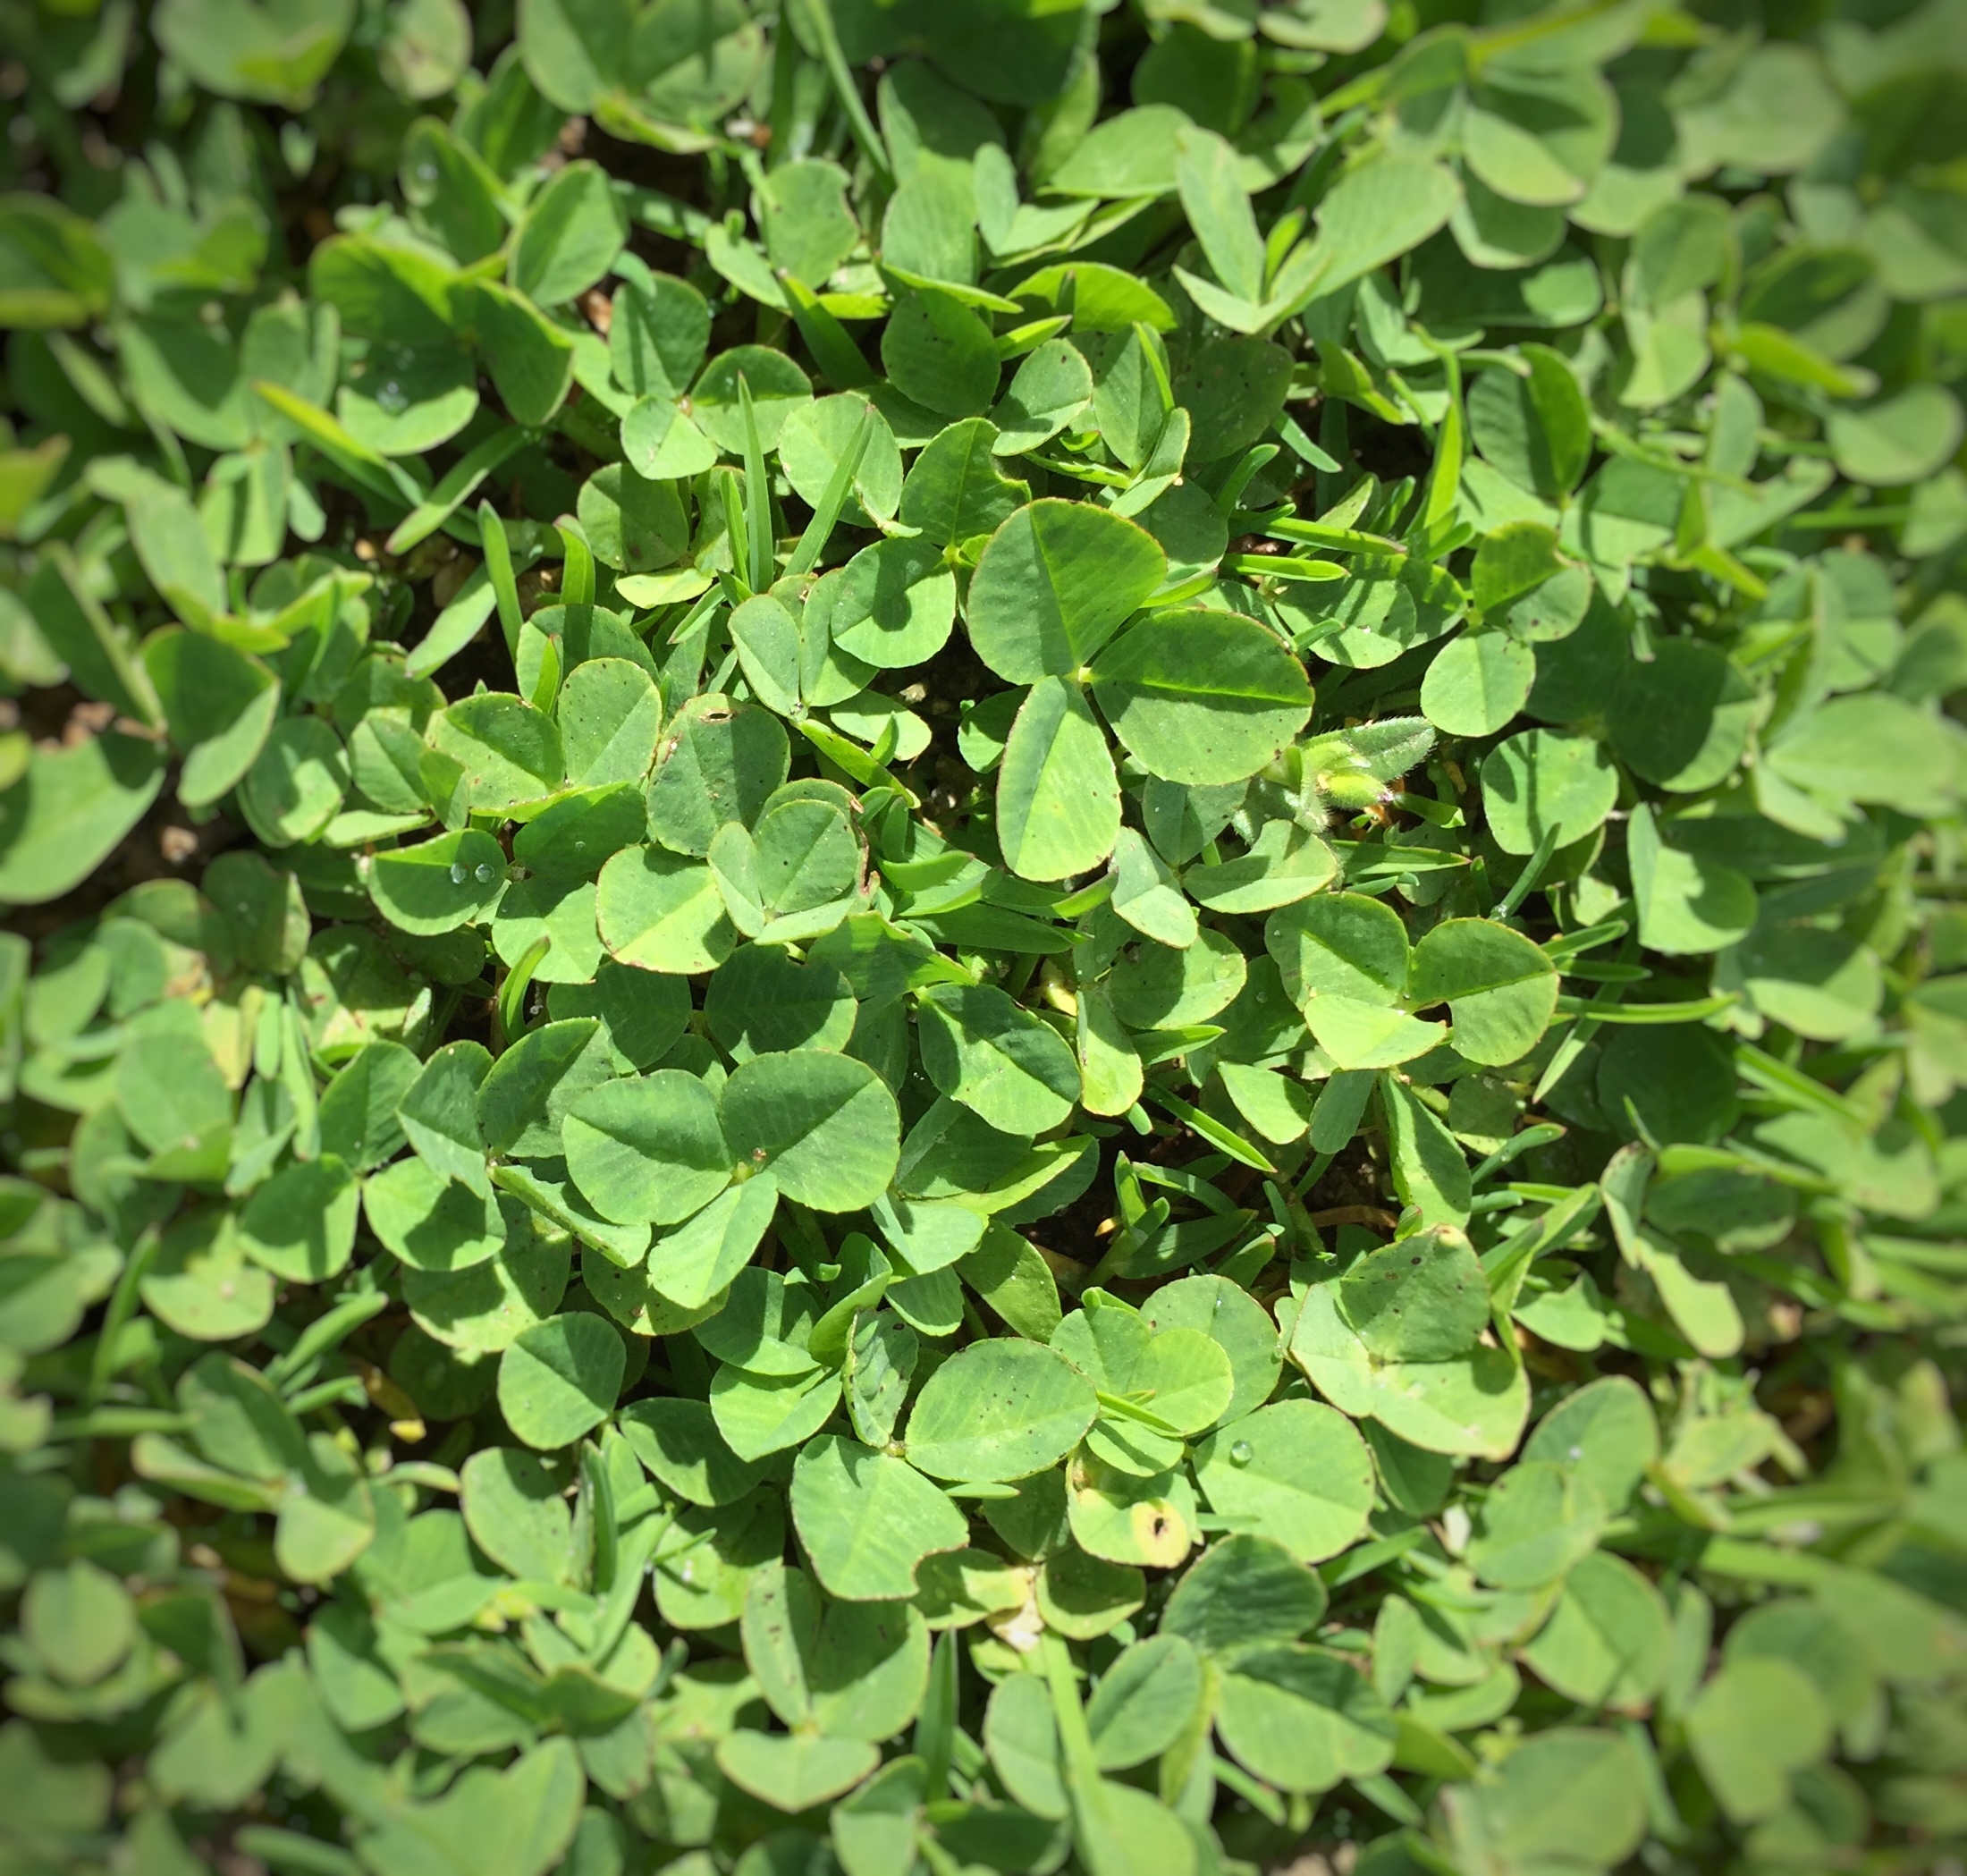 Closeup image of clover patch.